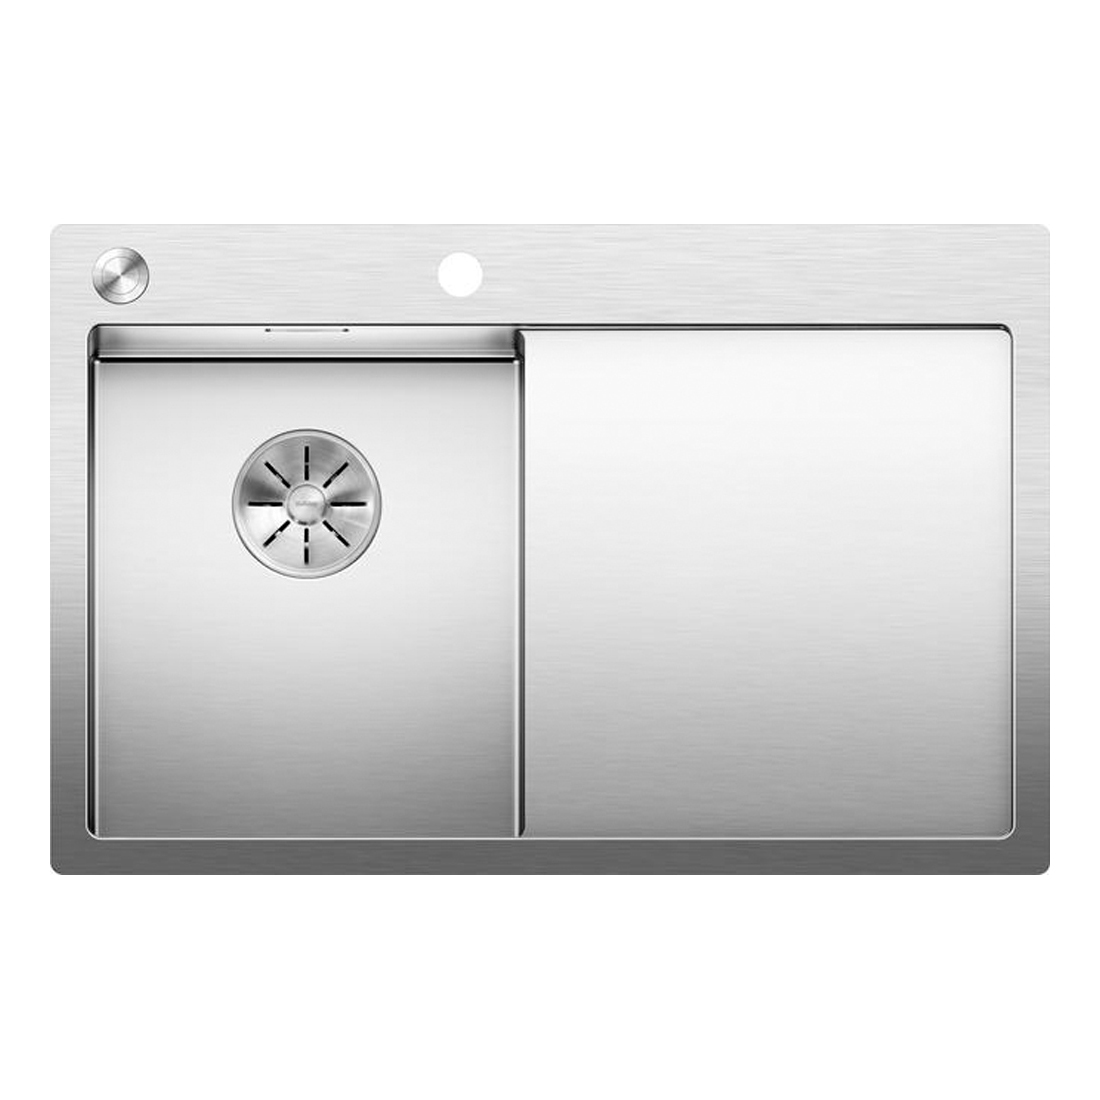 Кухонная мойка Blanco Claron 4S-IF/А L зеркальная полировка кухонная мойка blanco axis iii 6s if правая зеркальная полировка